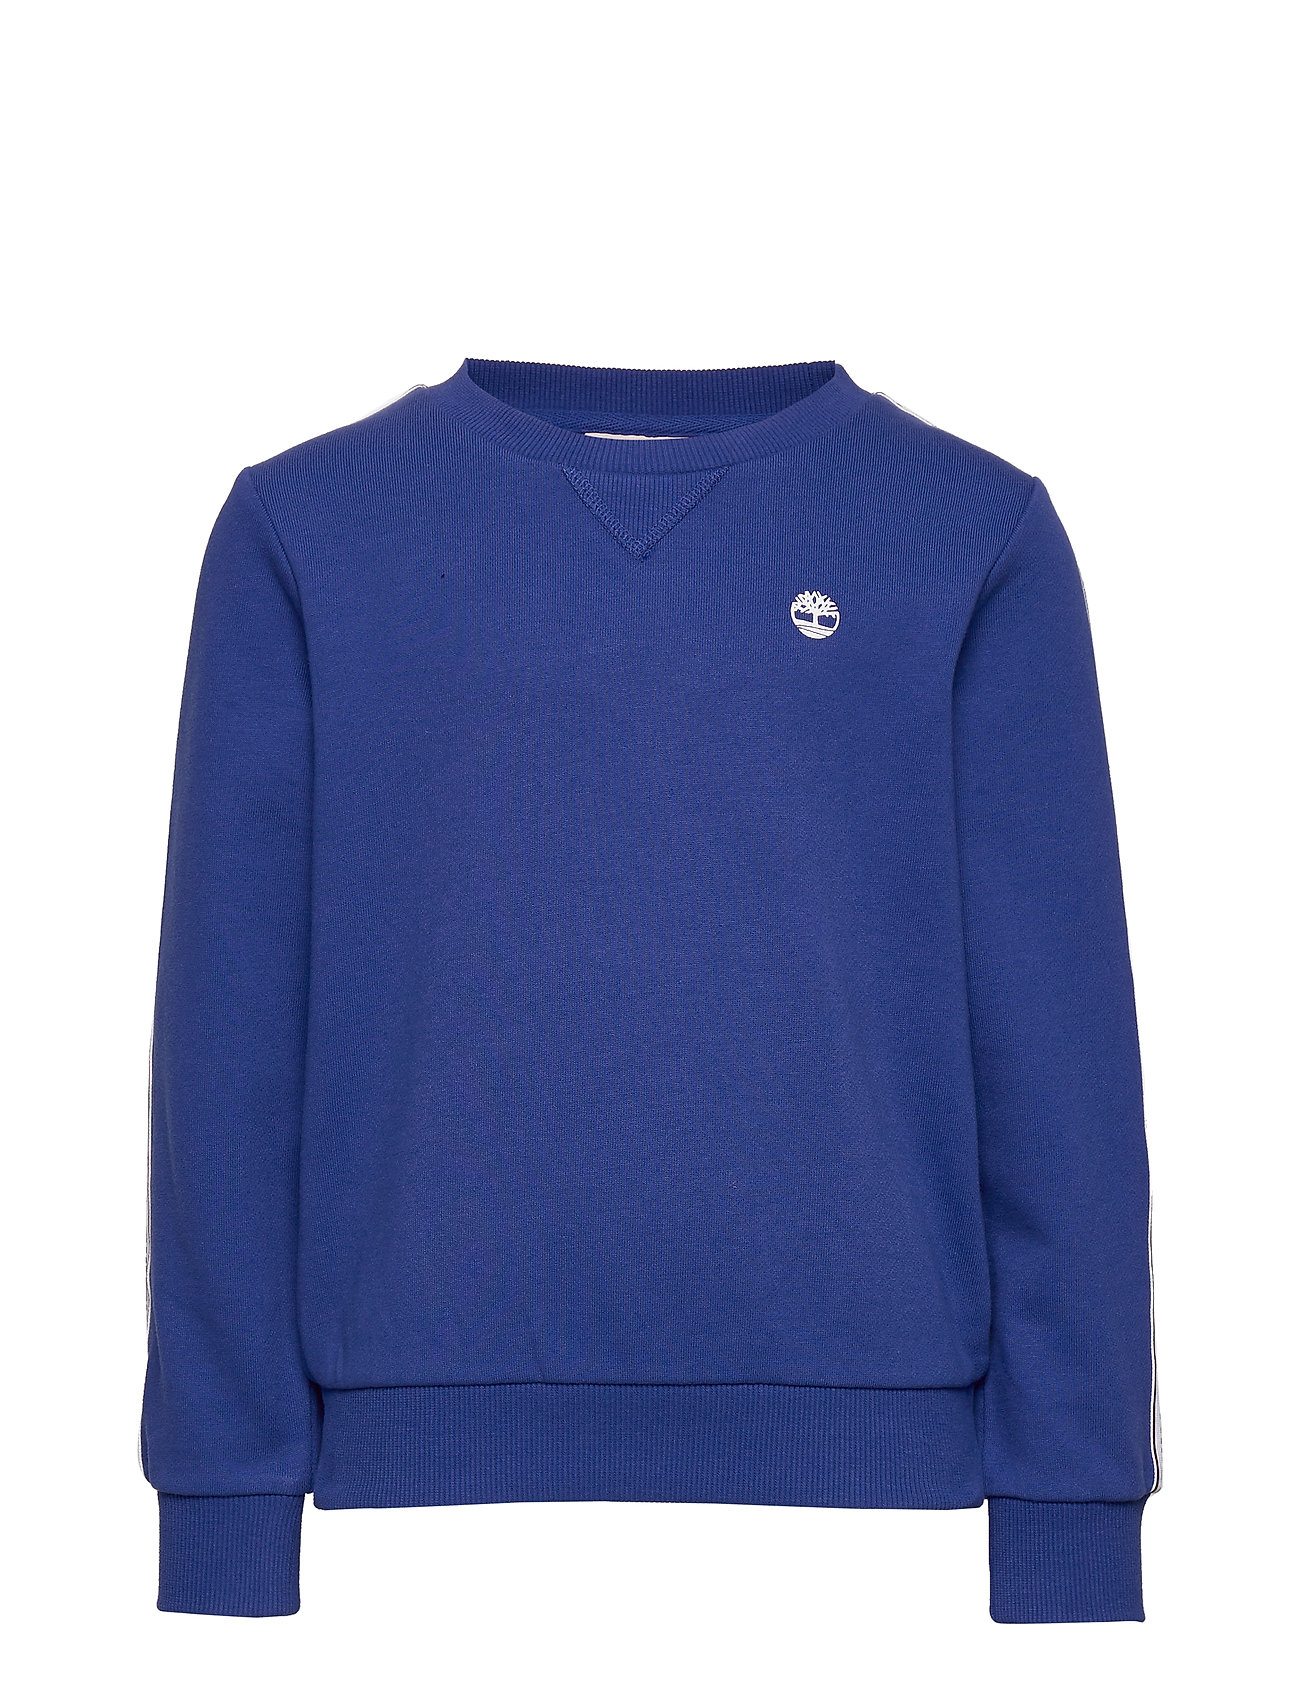 timberland blue sweatshirt